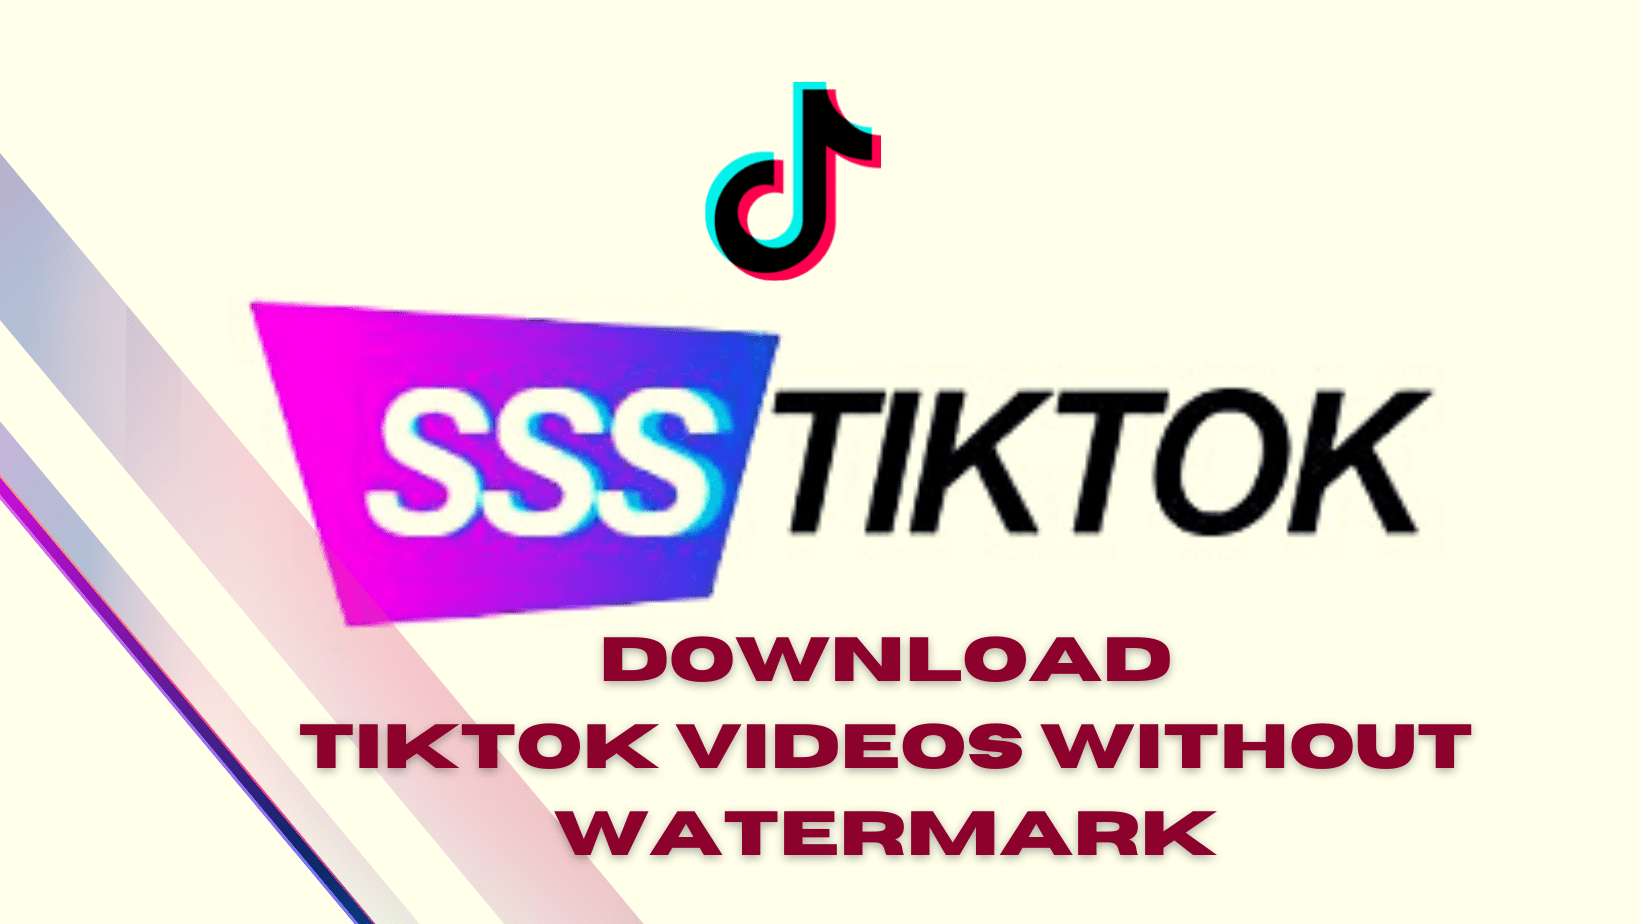 Ssstiktok TikTok Downloader